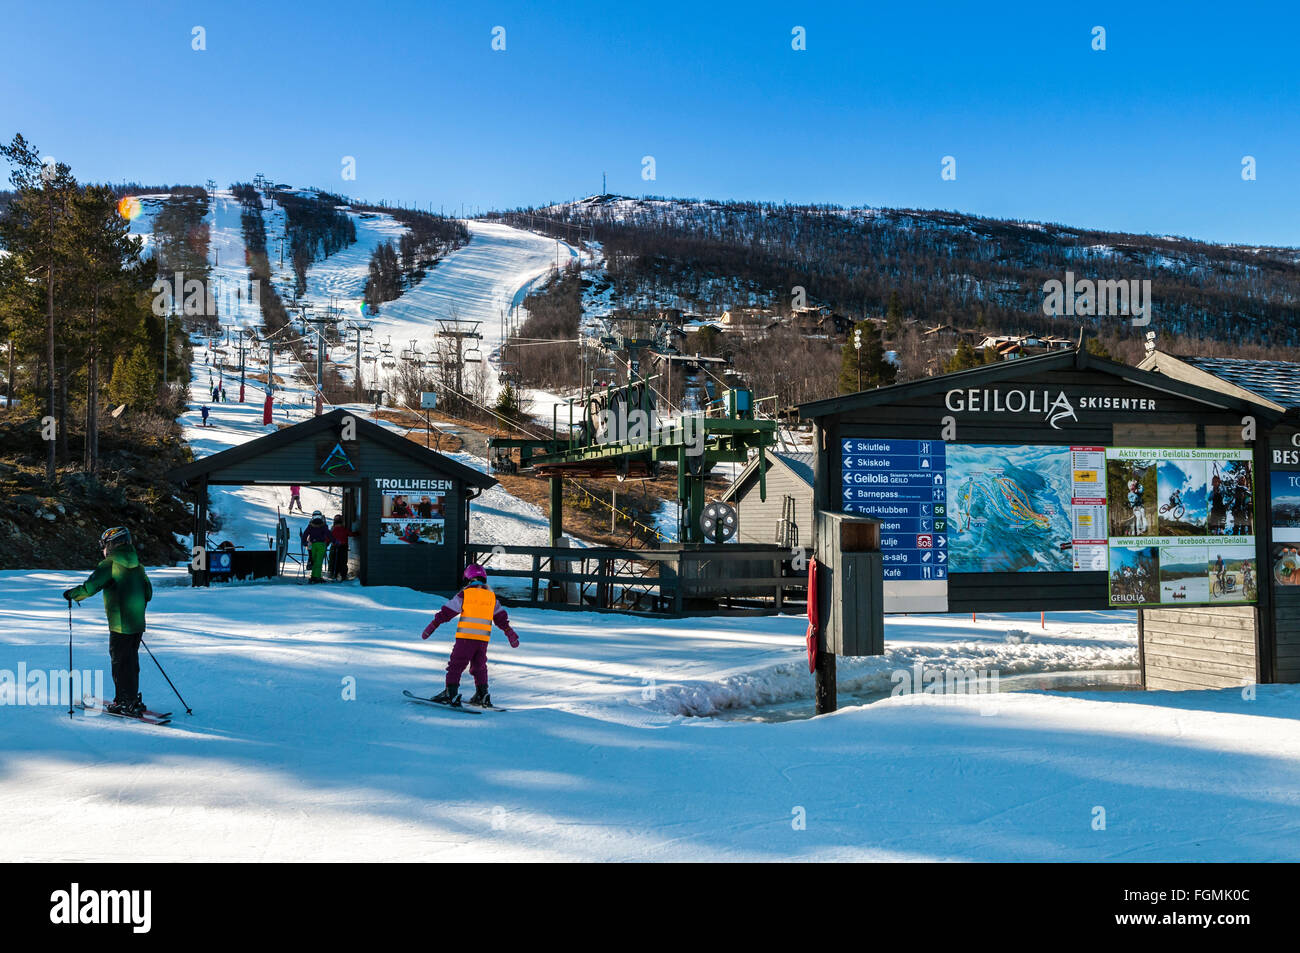 Ski slopes, skier, skicenter Geilolia, Geilo, winter, Buskerud, Norway  Stock Photo - Alamy